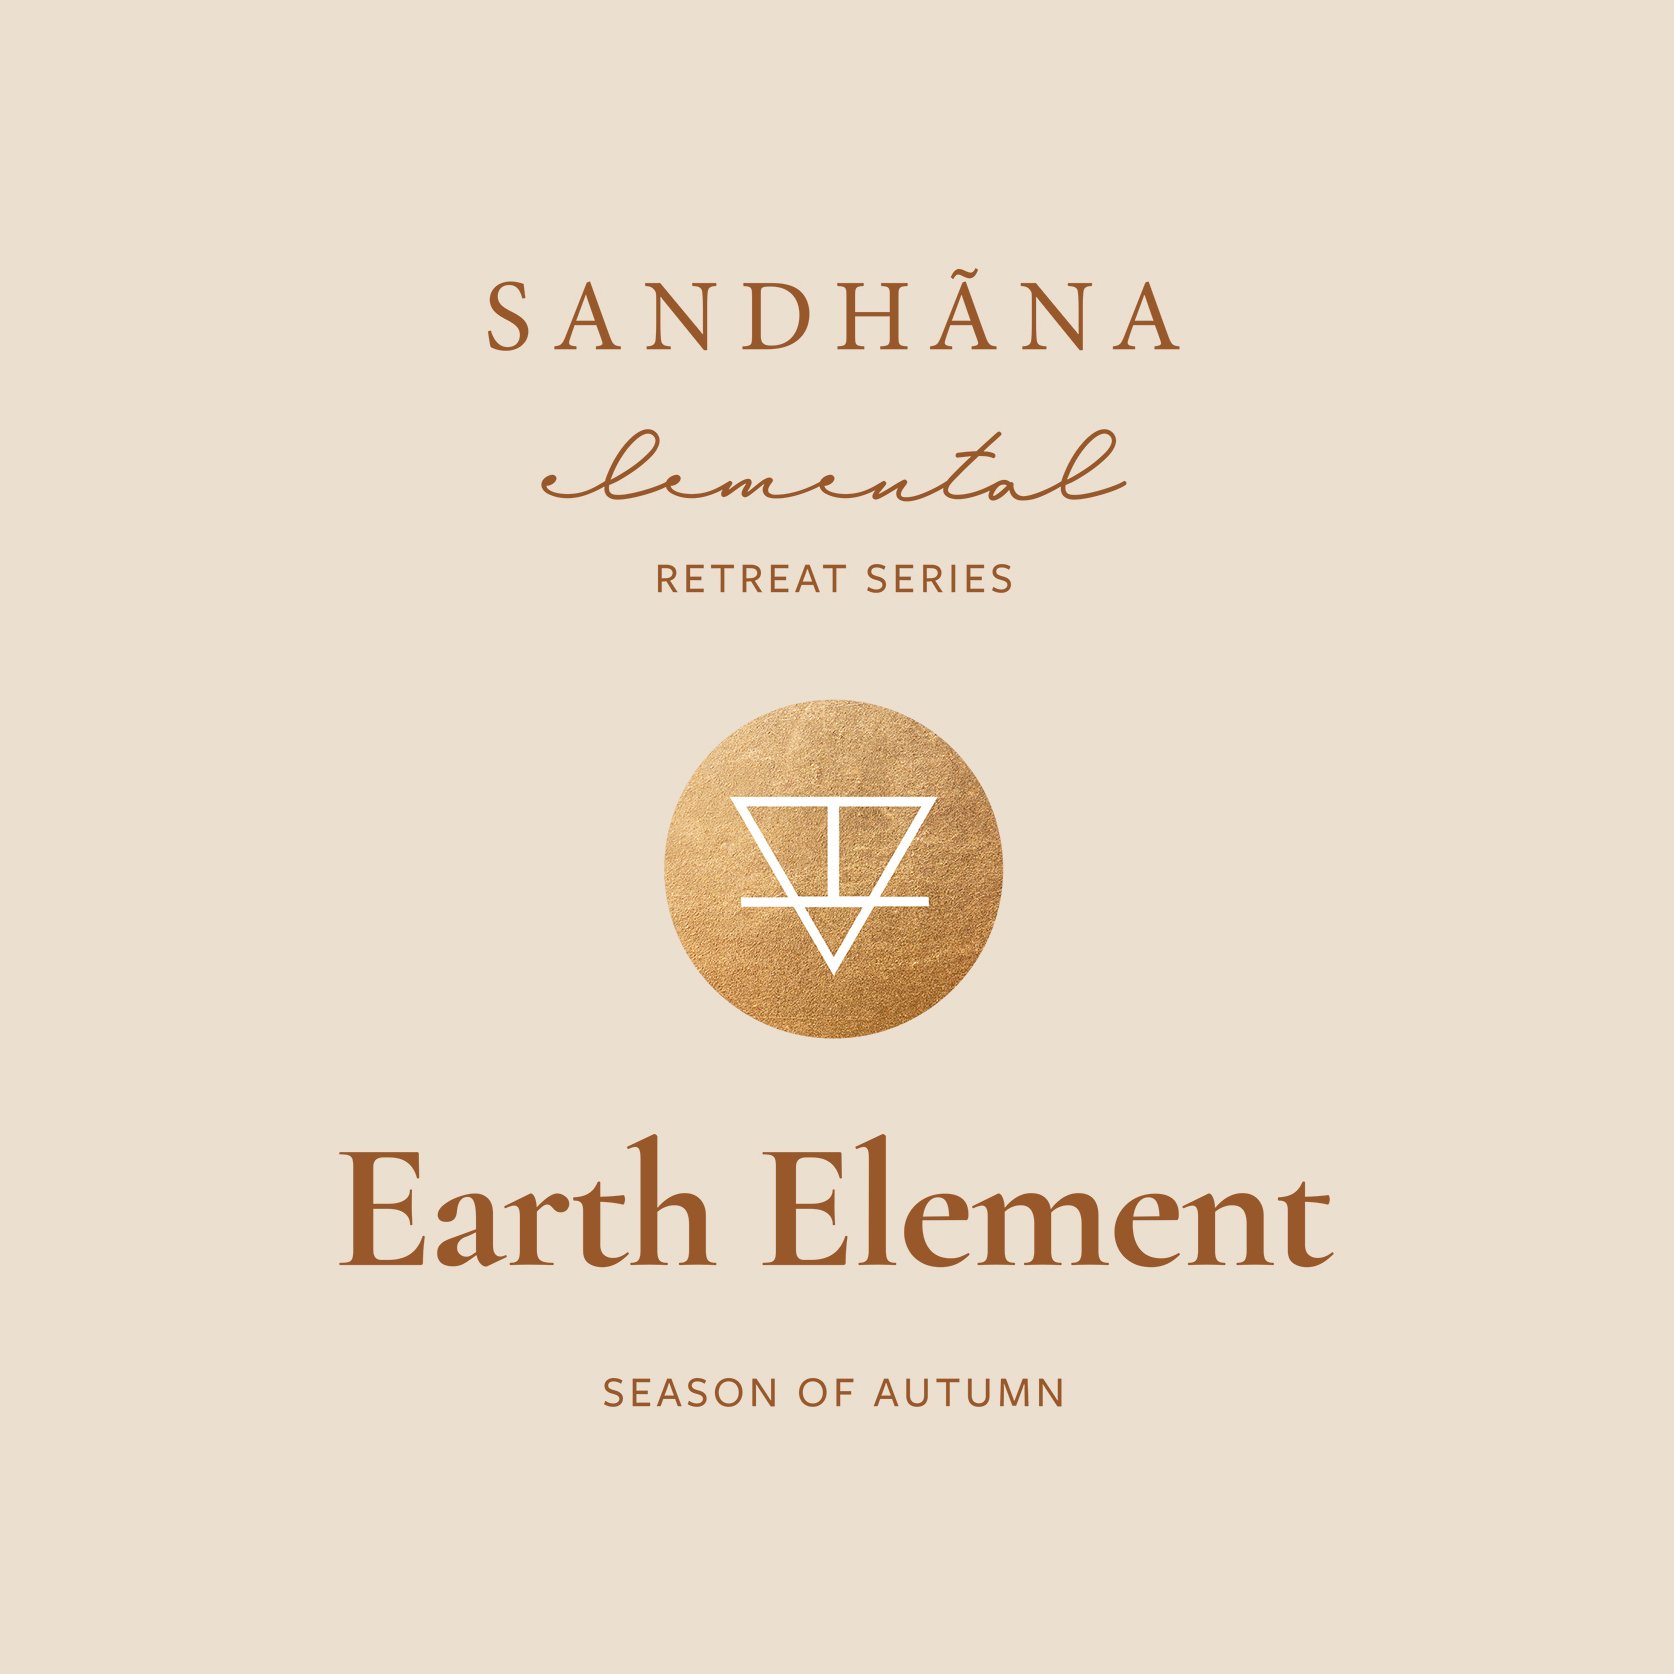 Sandhana_EarthElement_retreats_title.jpg